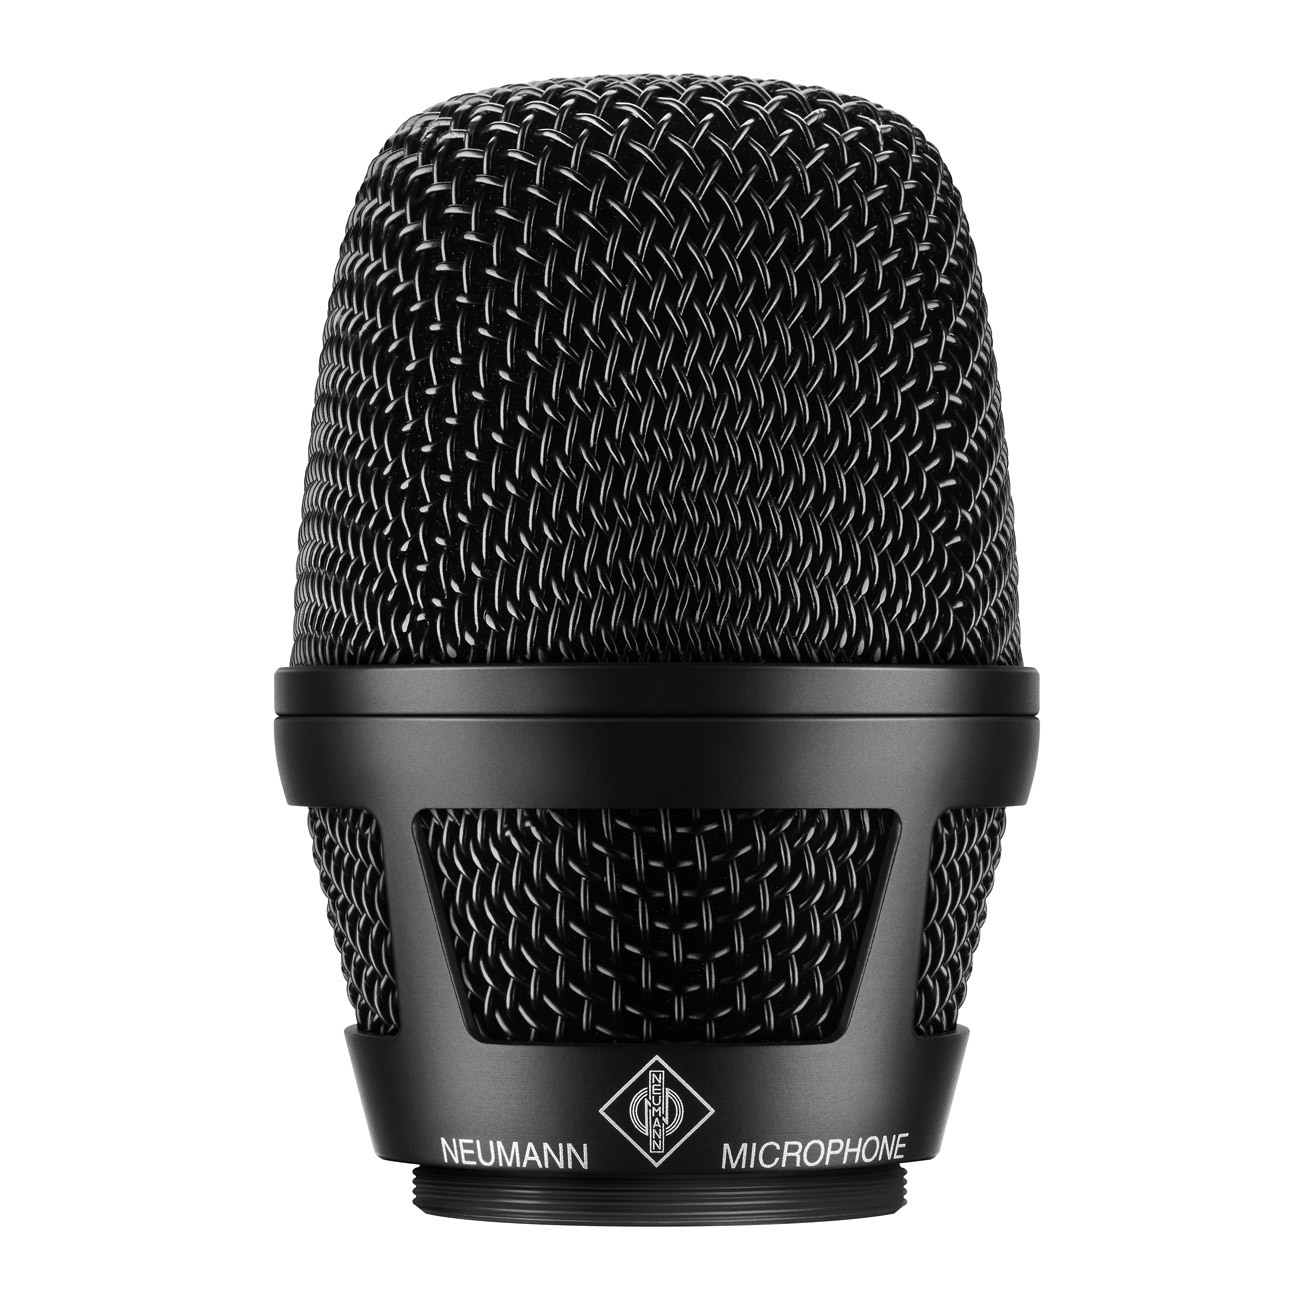 Sennheiser Ew 500 G4-kk205-bw - Wireless handheld microphone - Variation 1